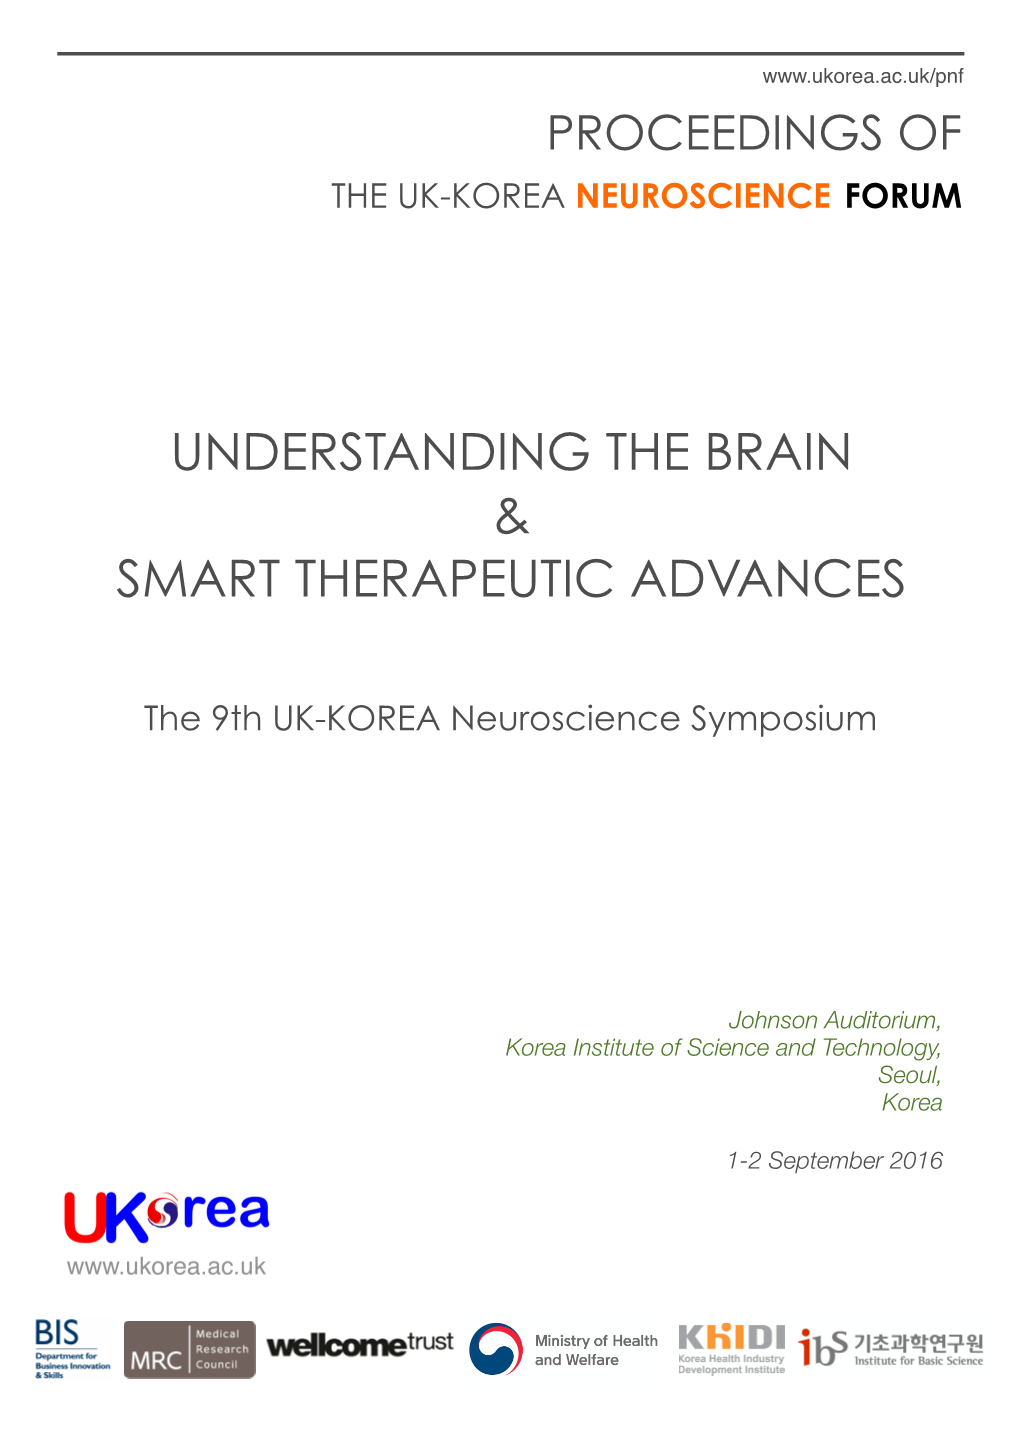 Proceedings from the 2016 UK-Korea Neuroscience Symposium